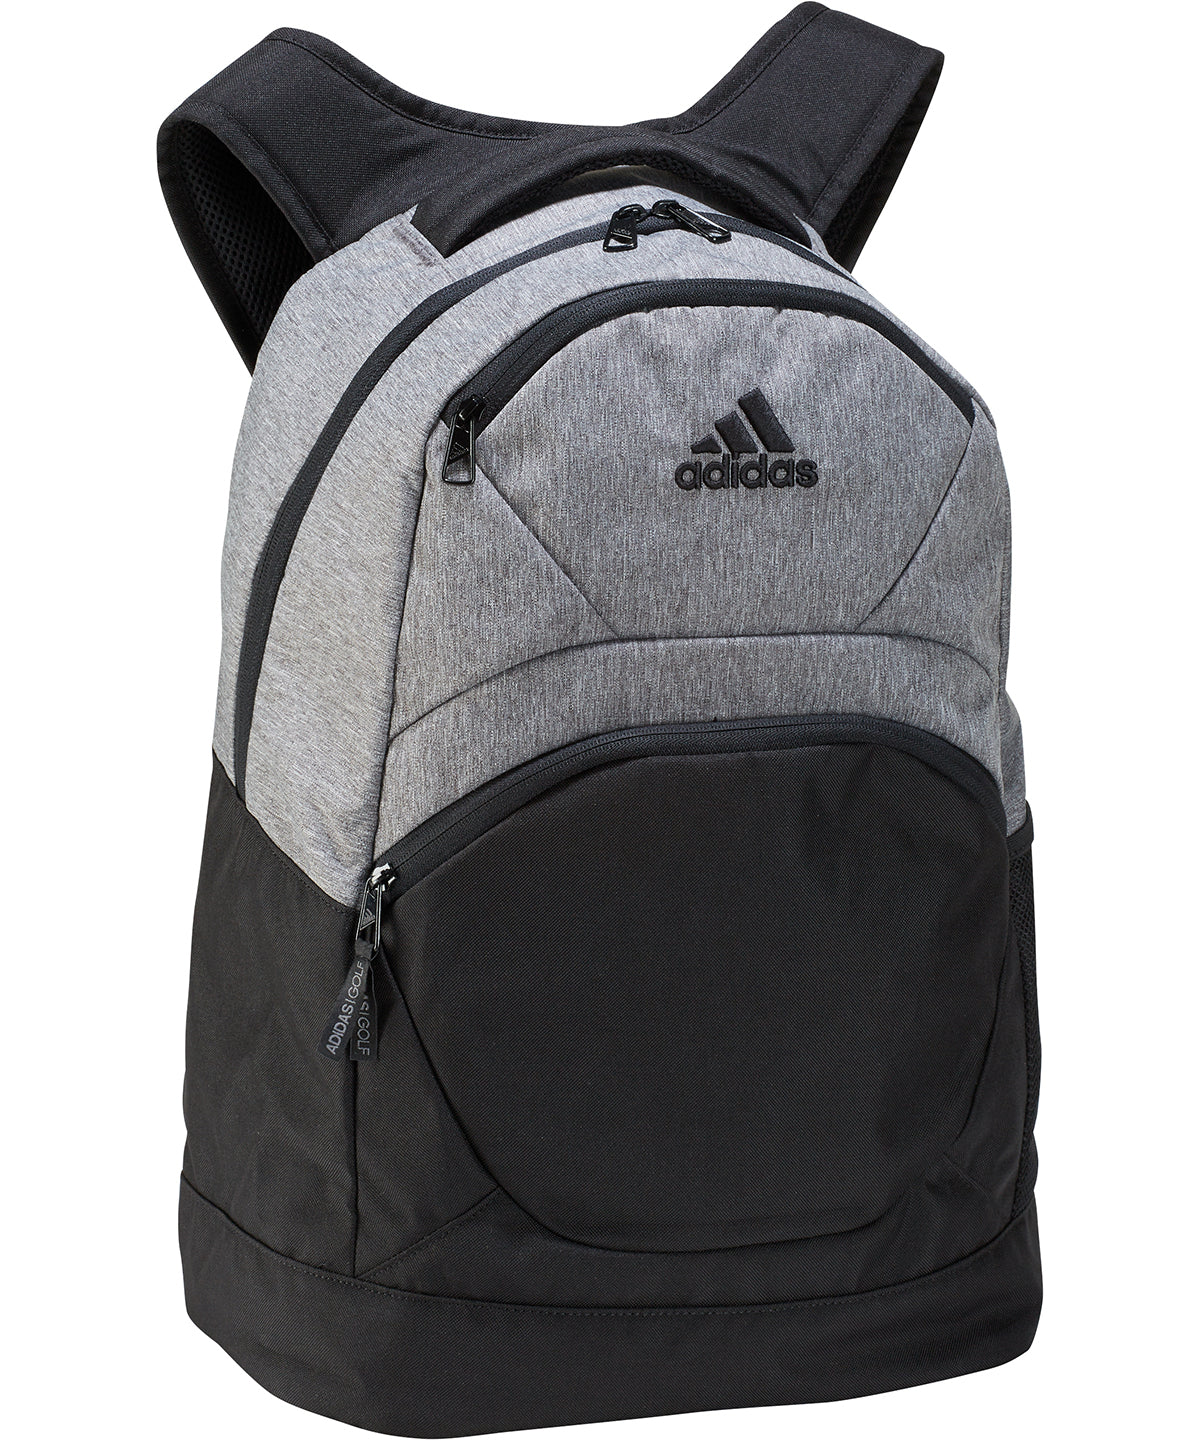 Töskur - Medium Backpack